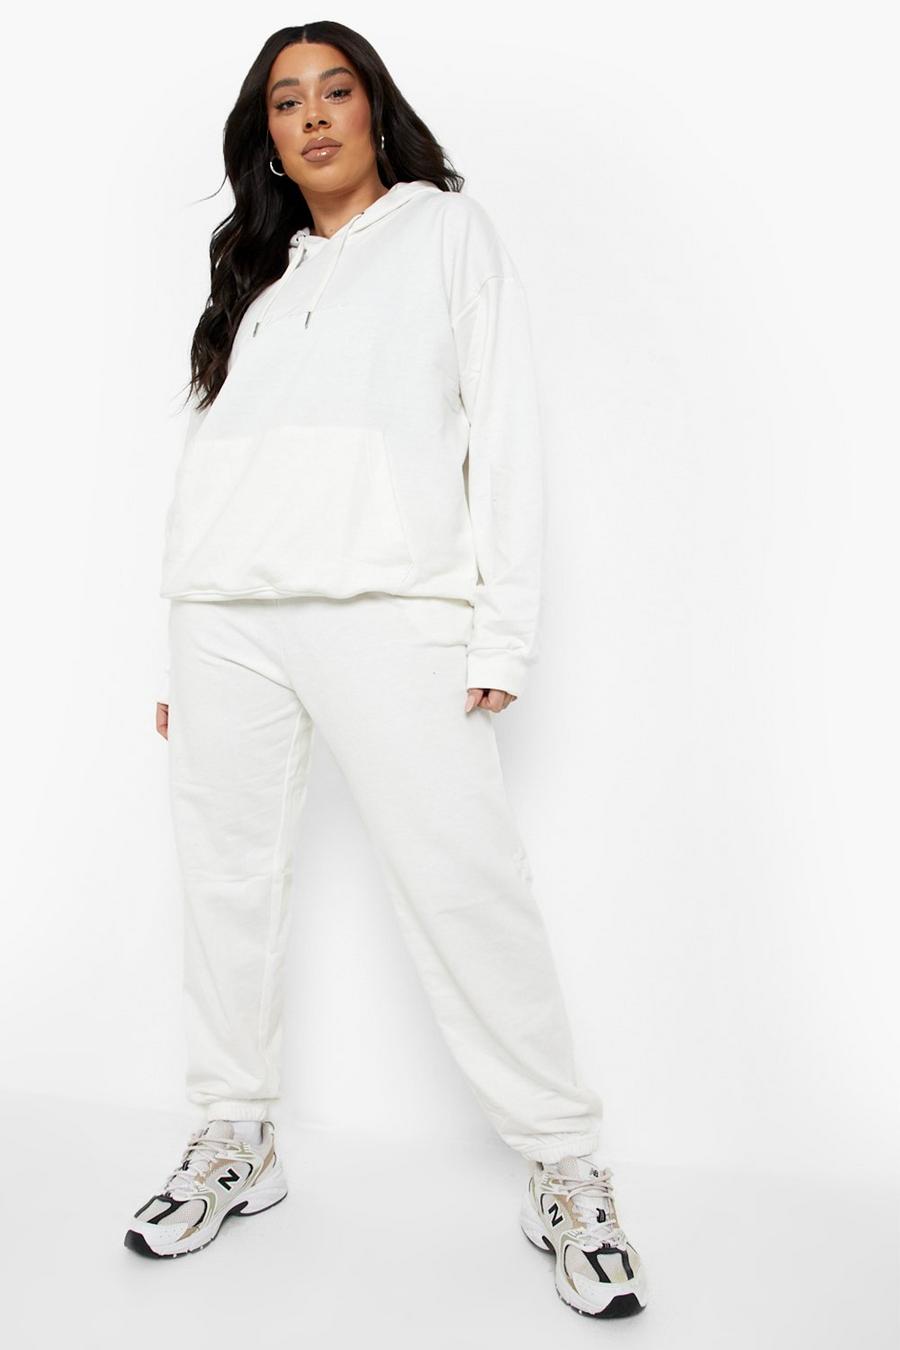 Pantaloni tuta Plus Size oversize Woman con ricami, Ecru blanco image number 1